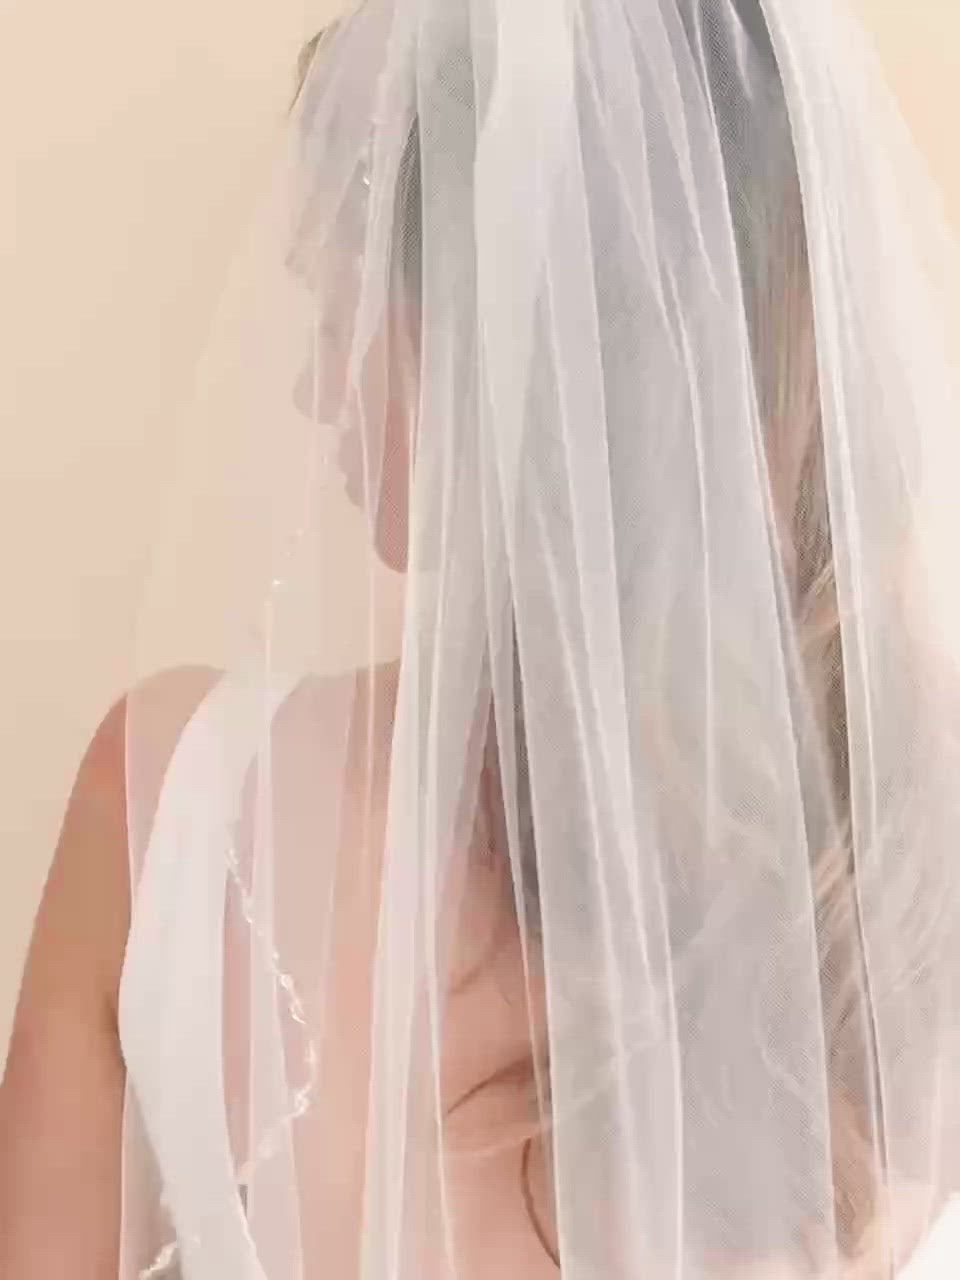 Alice + Mae Bridal— Delia- Pearl Embellished Veil